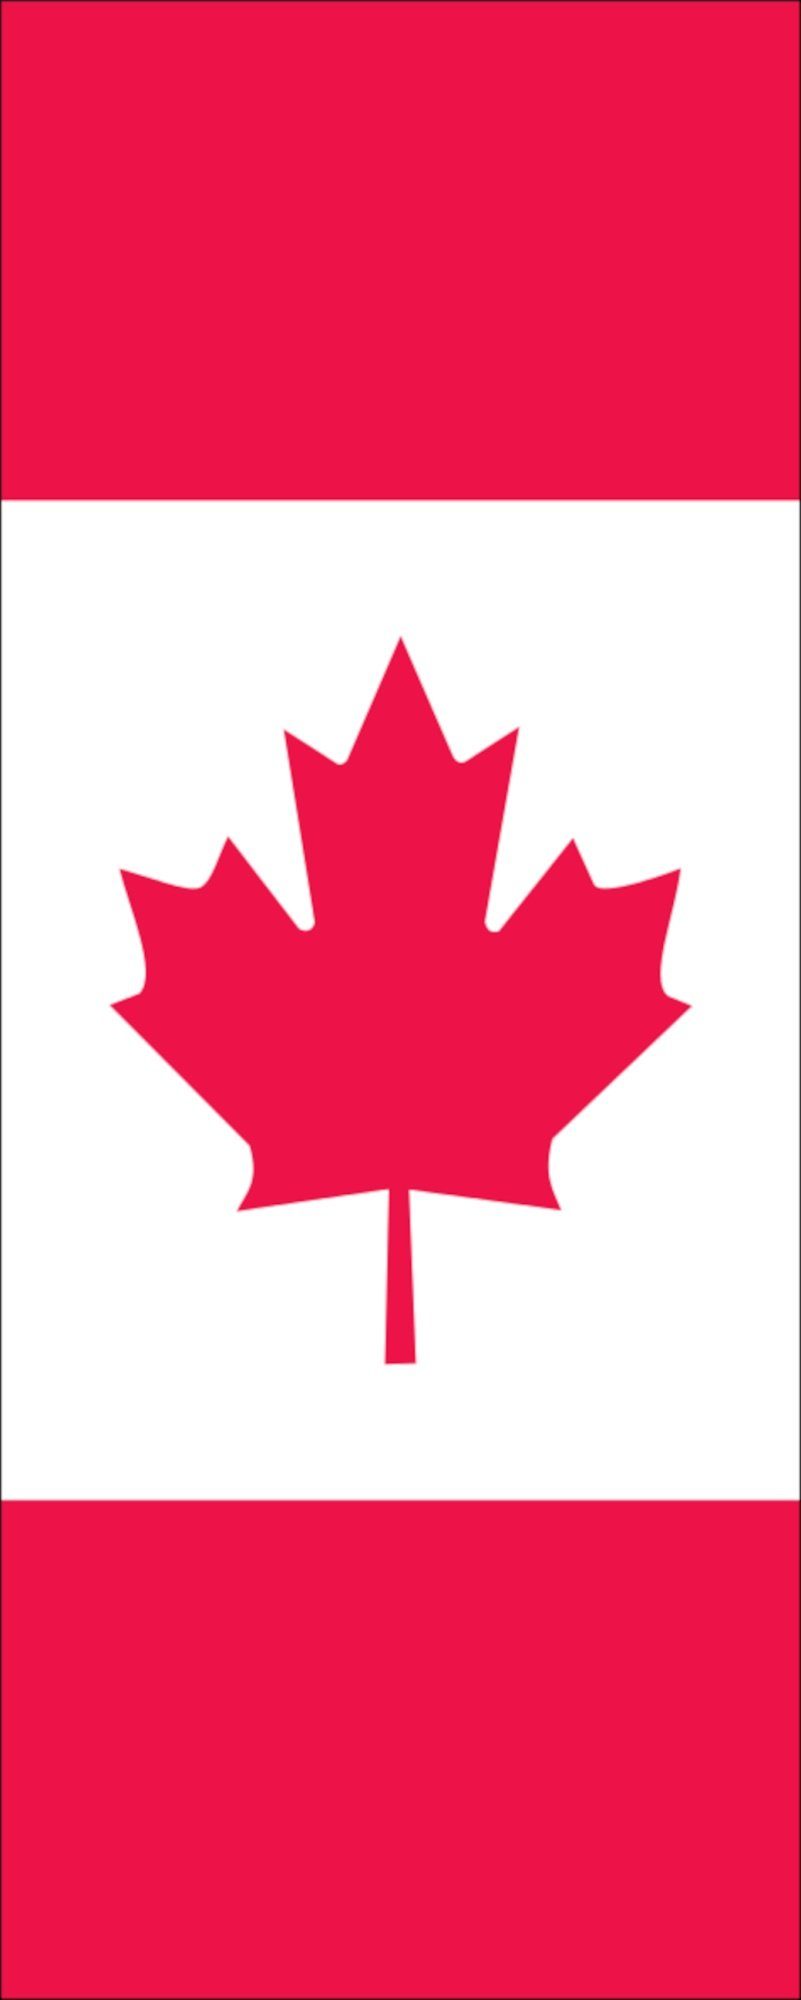 Kanada Flagge Hochformat flaggenmeer g/m² 160